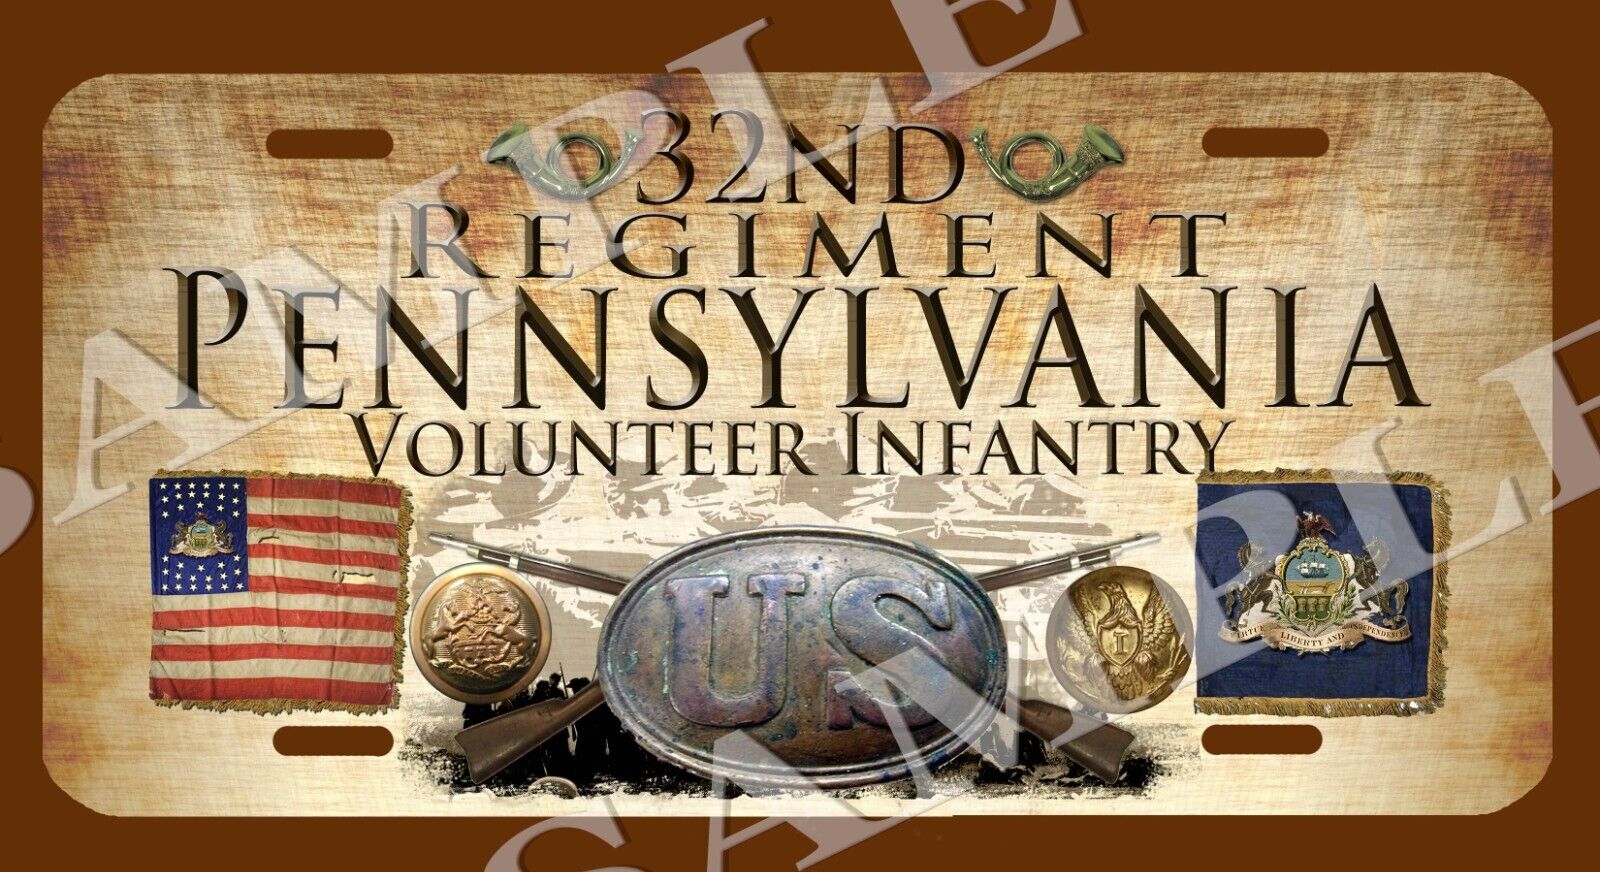 32nd Pennsylvania Regiment American Civil War Themed vehicle license plate